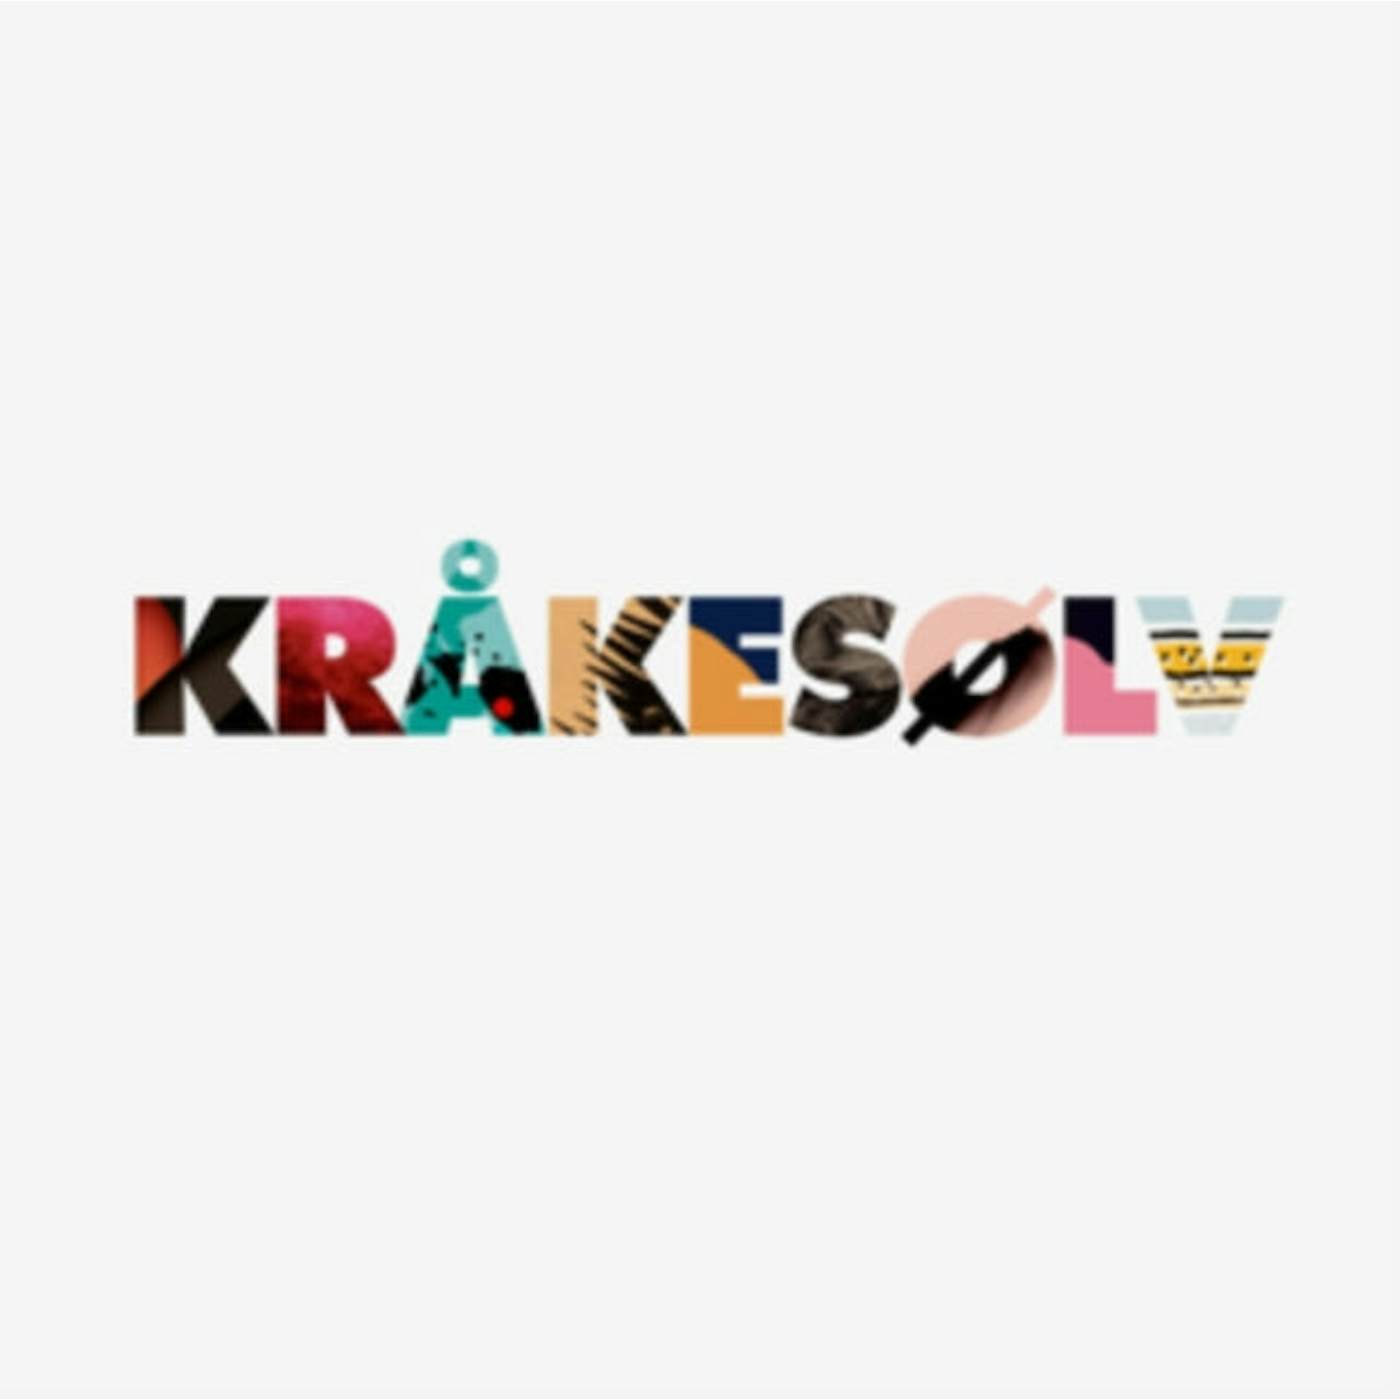 Krakesolv LP - Krakesolv (Vinyl)